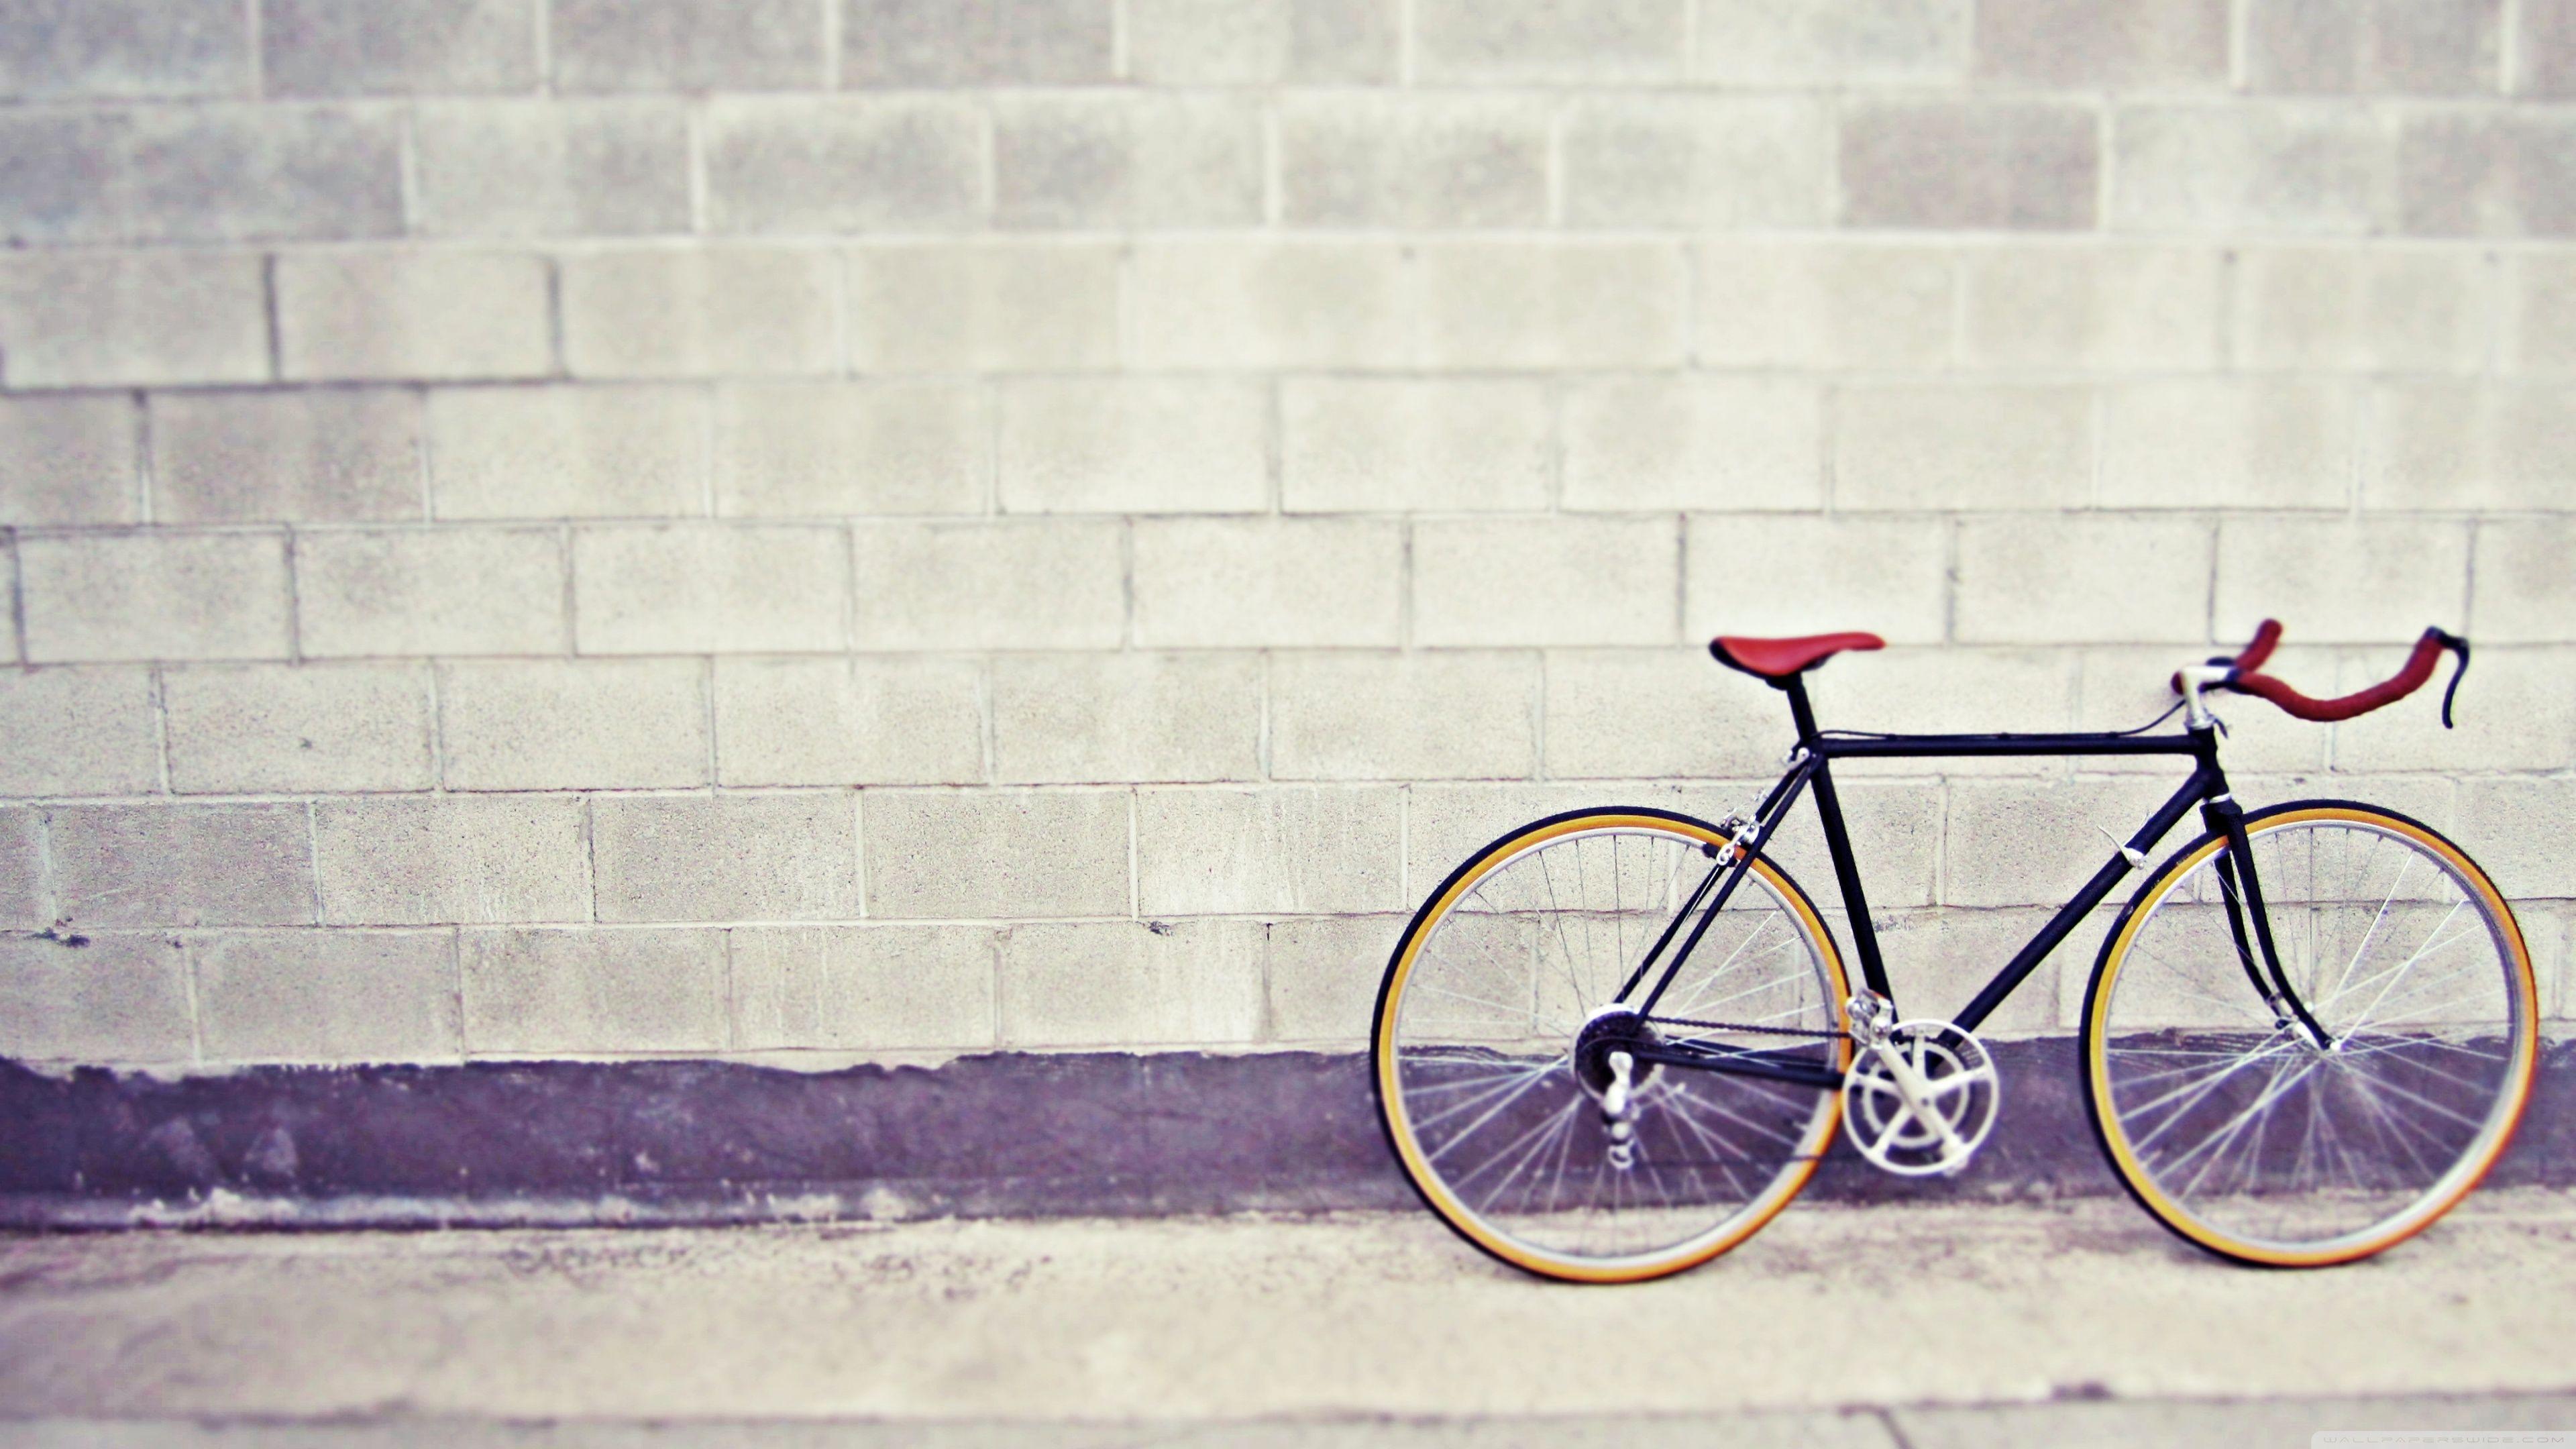 Bicycle Wallpaper.com